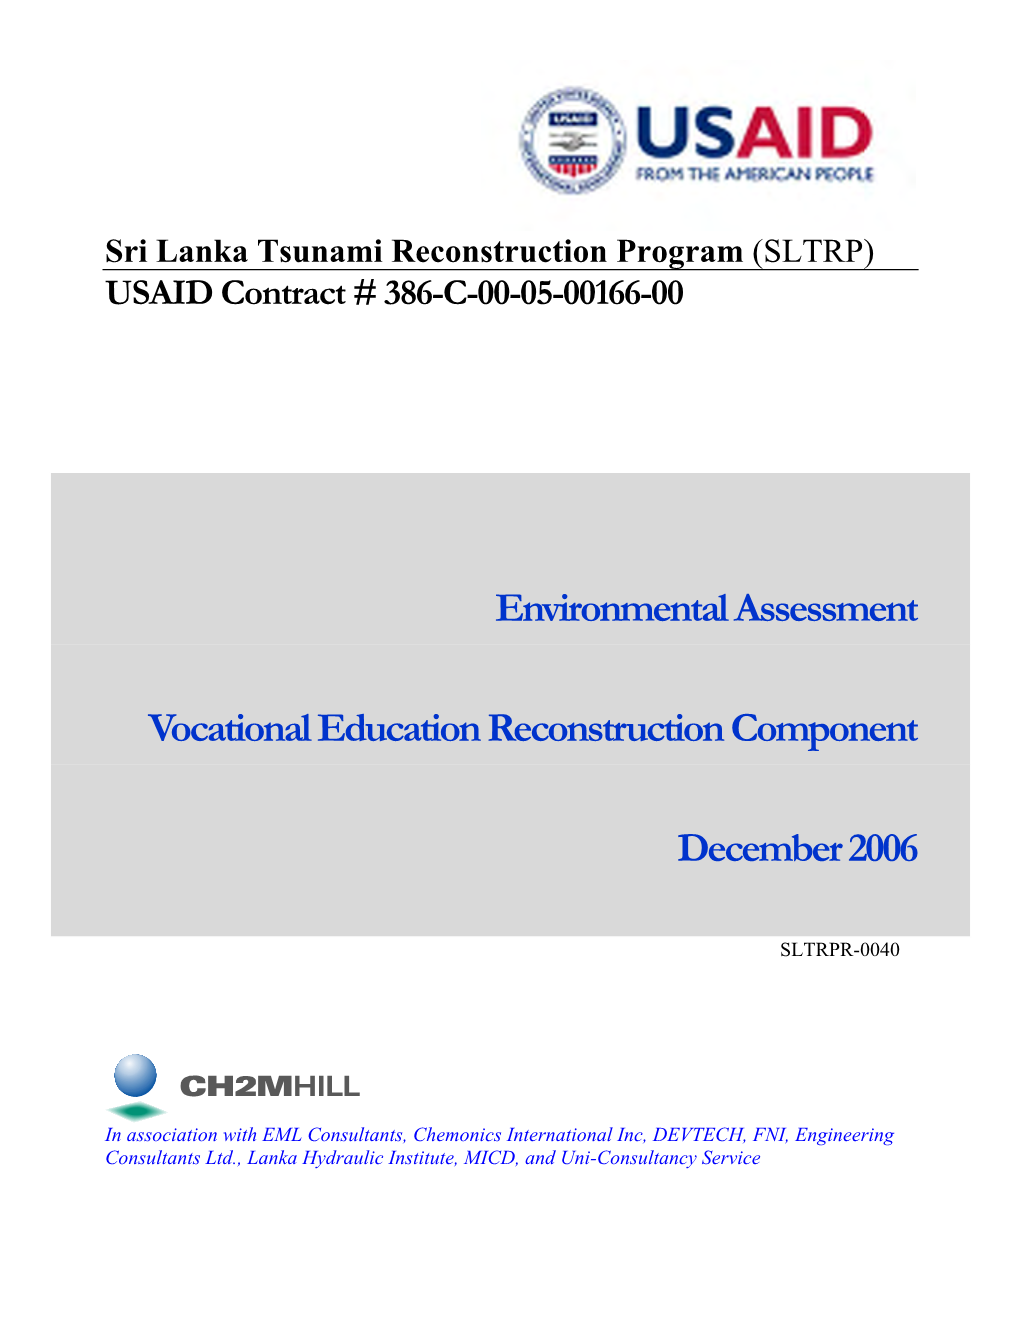 Environmental Assessment Vocational Education Reconstruction